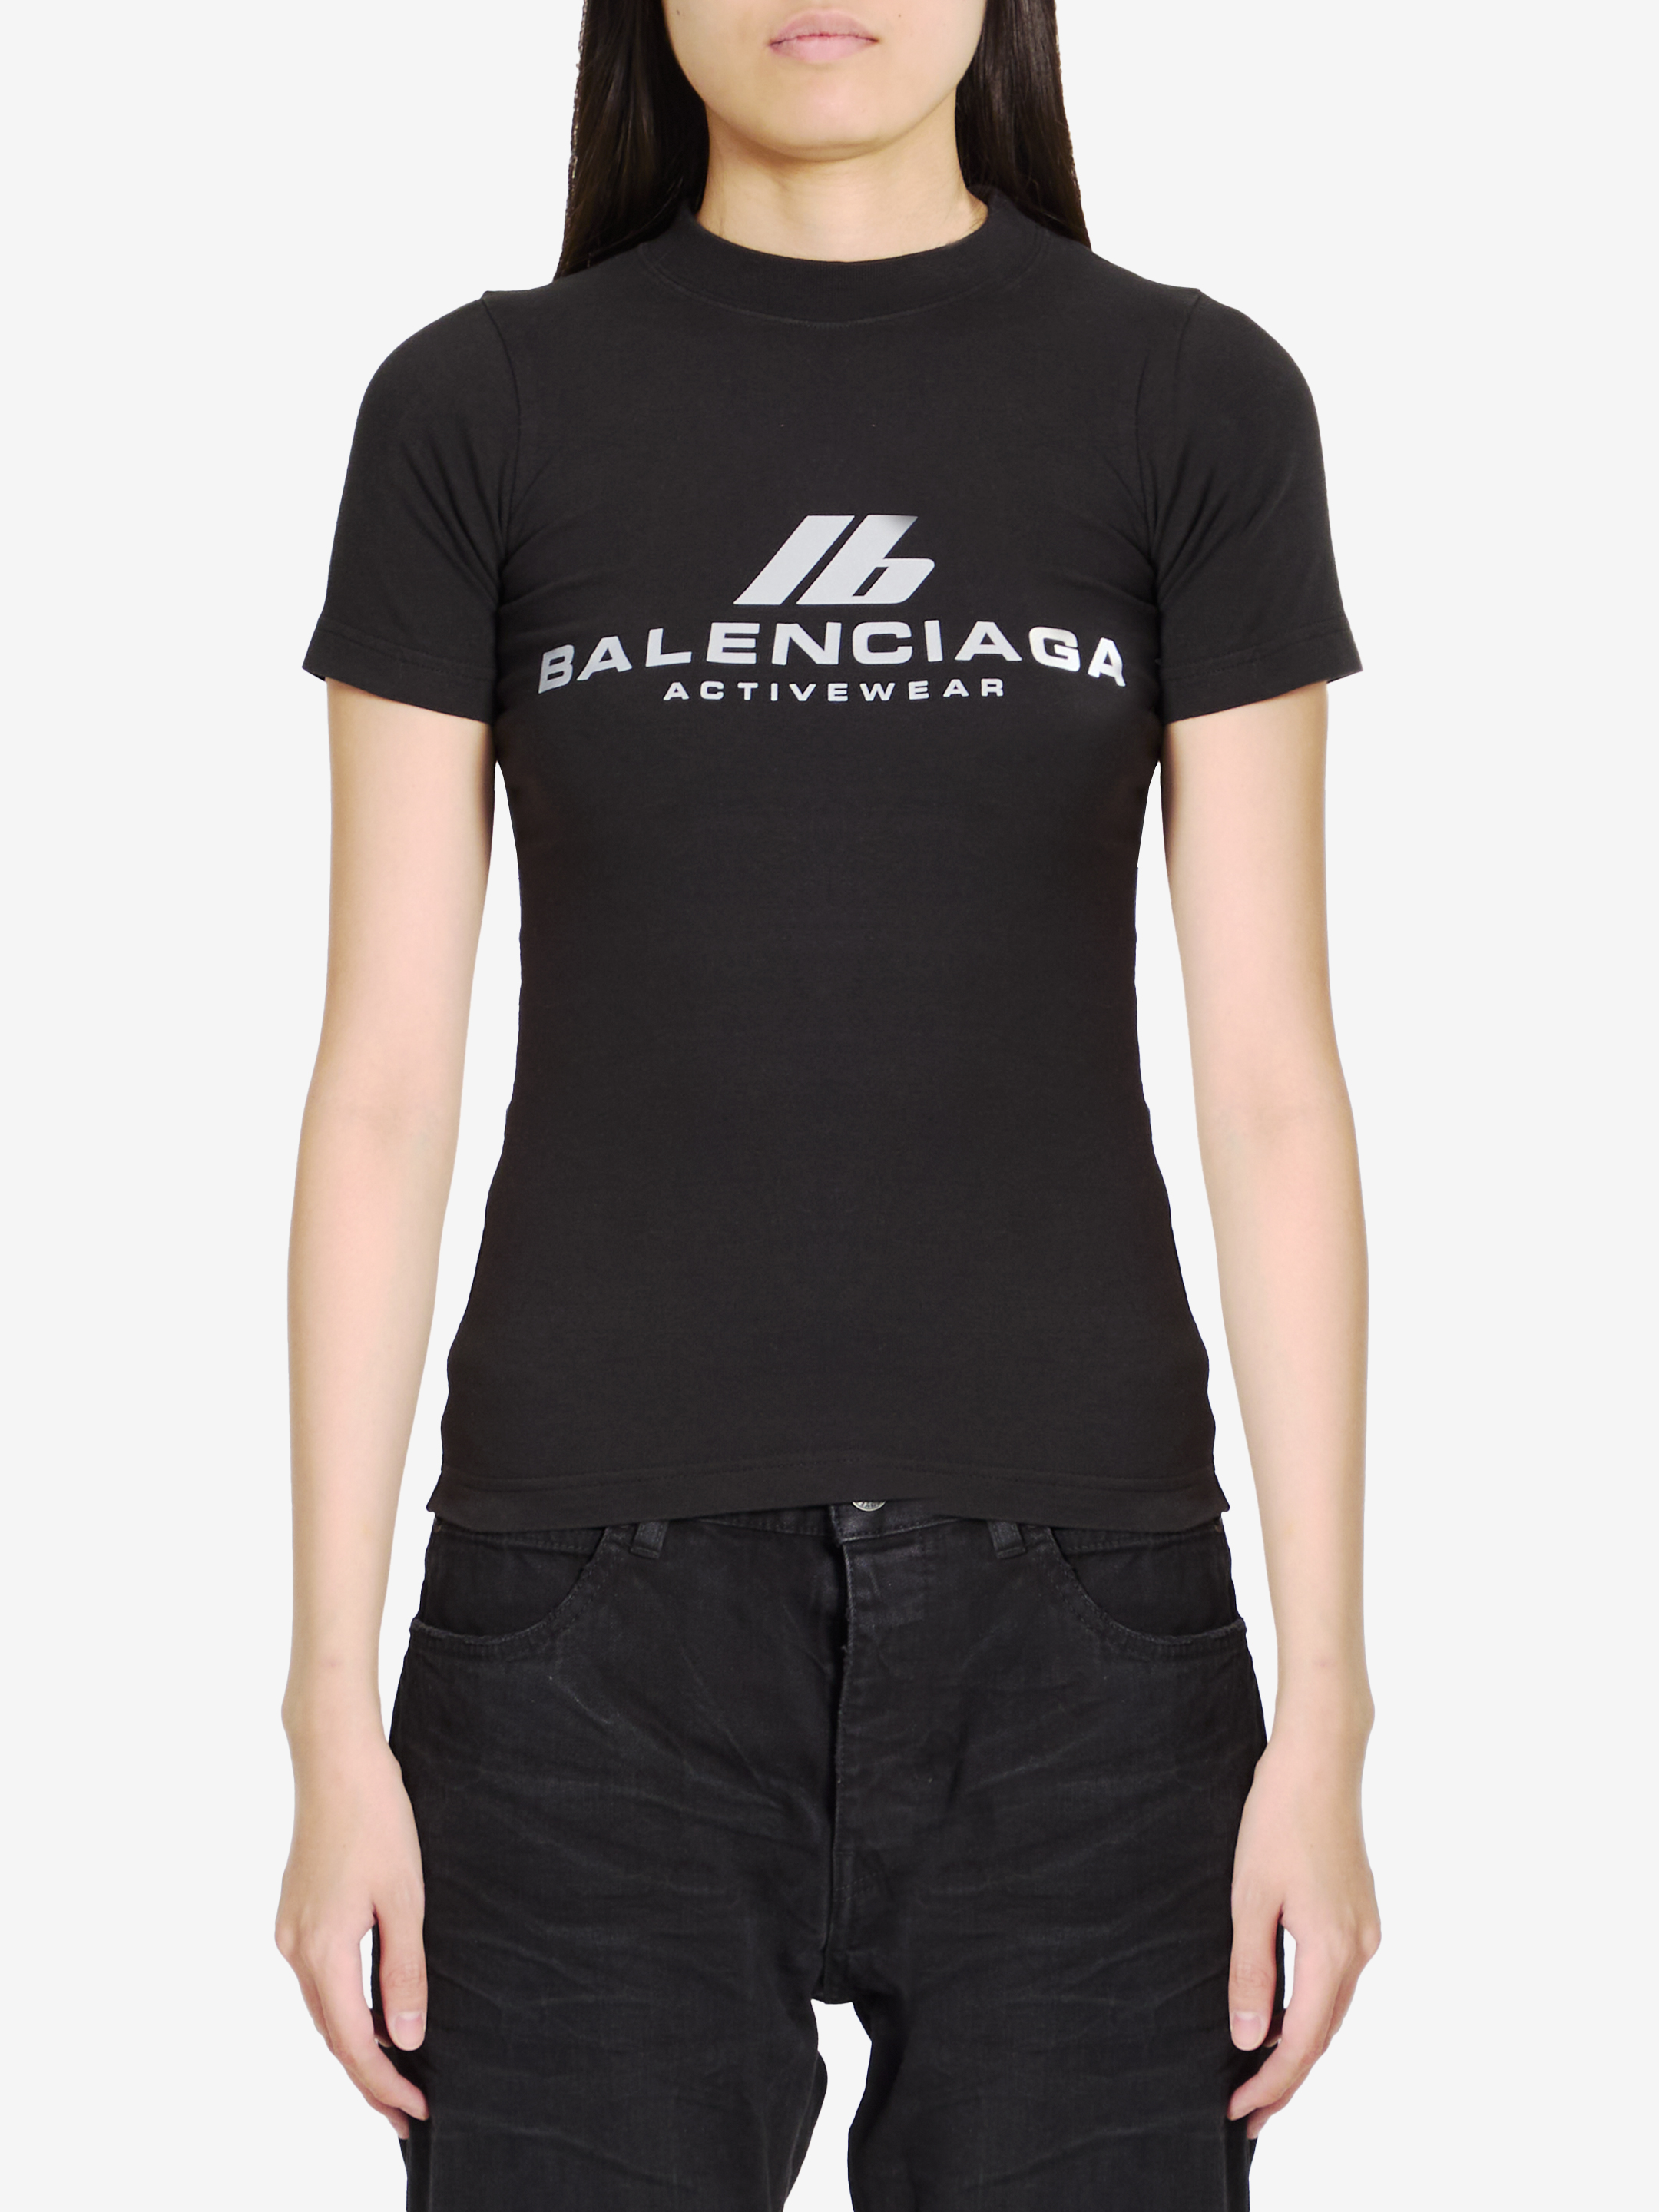 Balenciaga Activewear Stretch Jersey T-shirt In Black